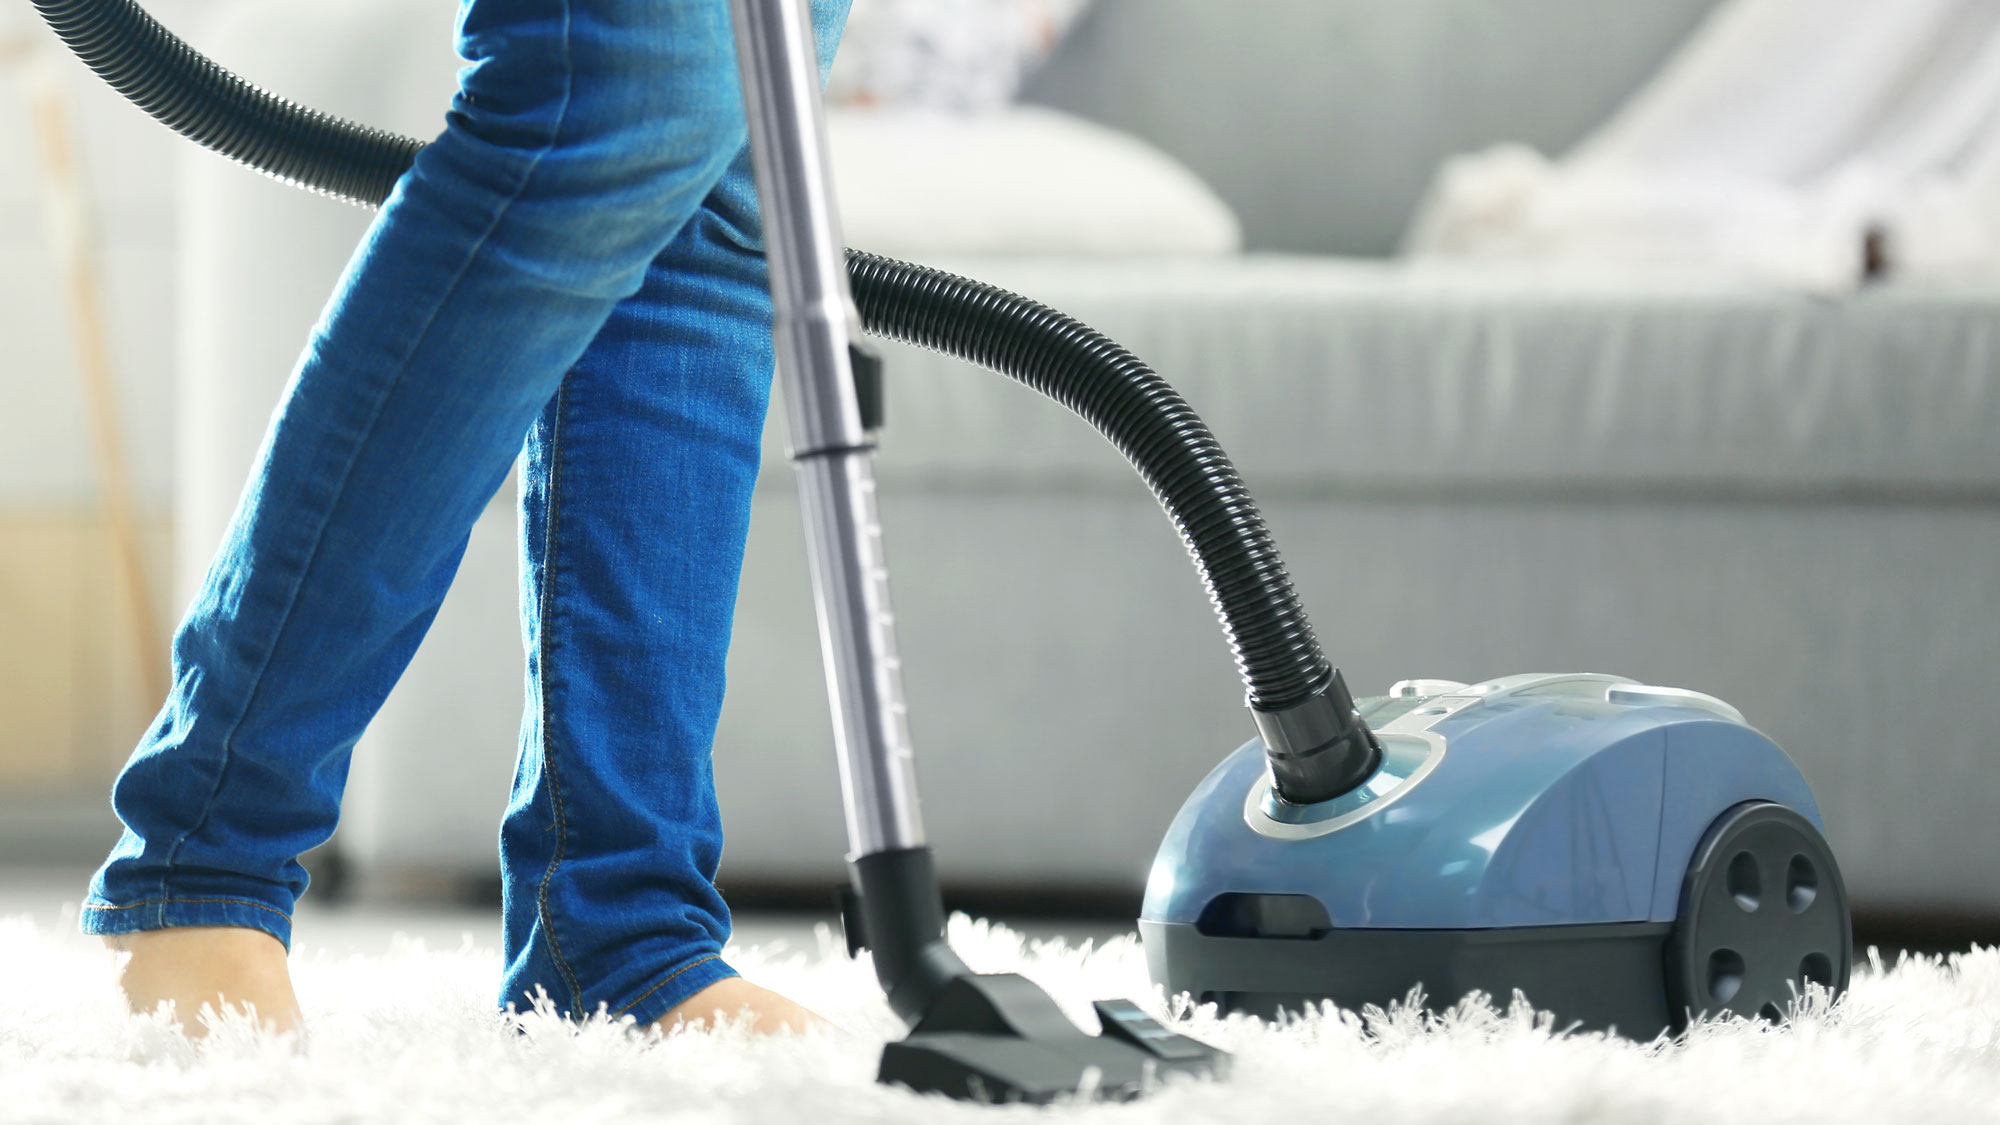 Review of Bissel Healthy Home HEPA Vacuum Cleaner